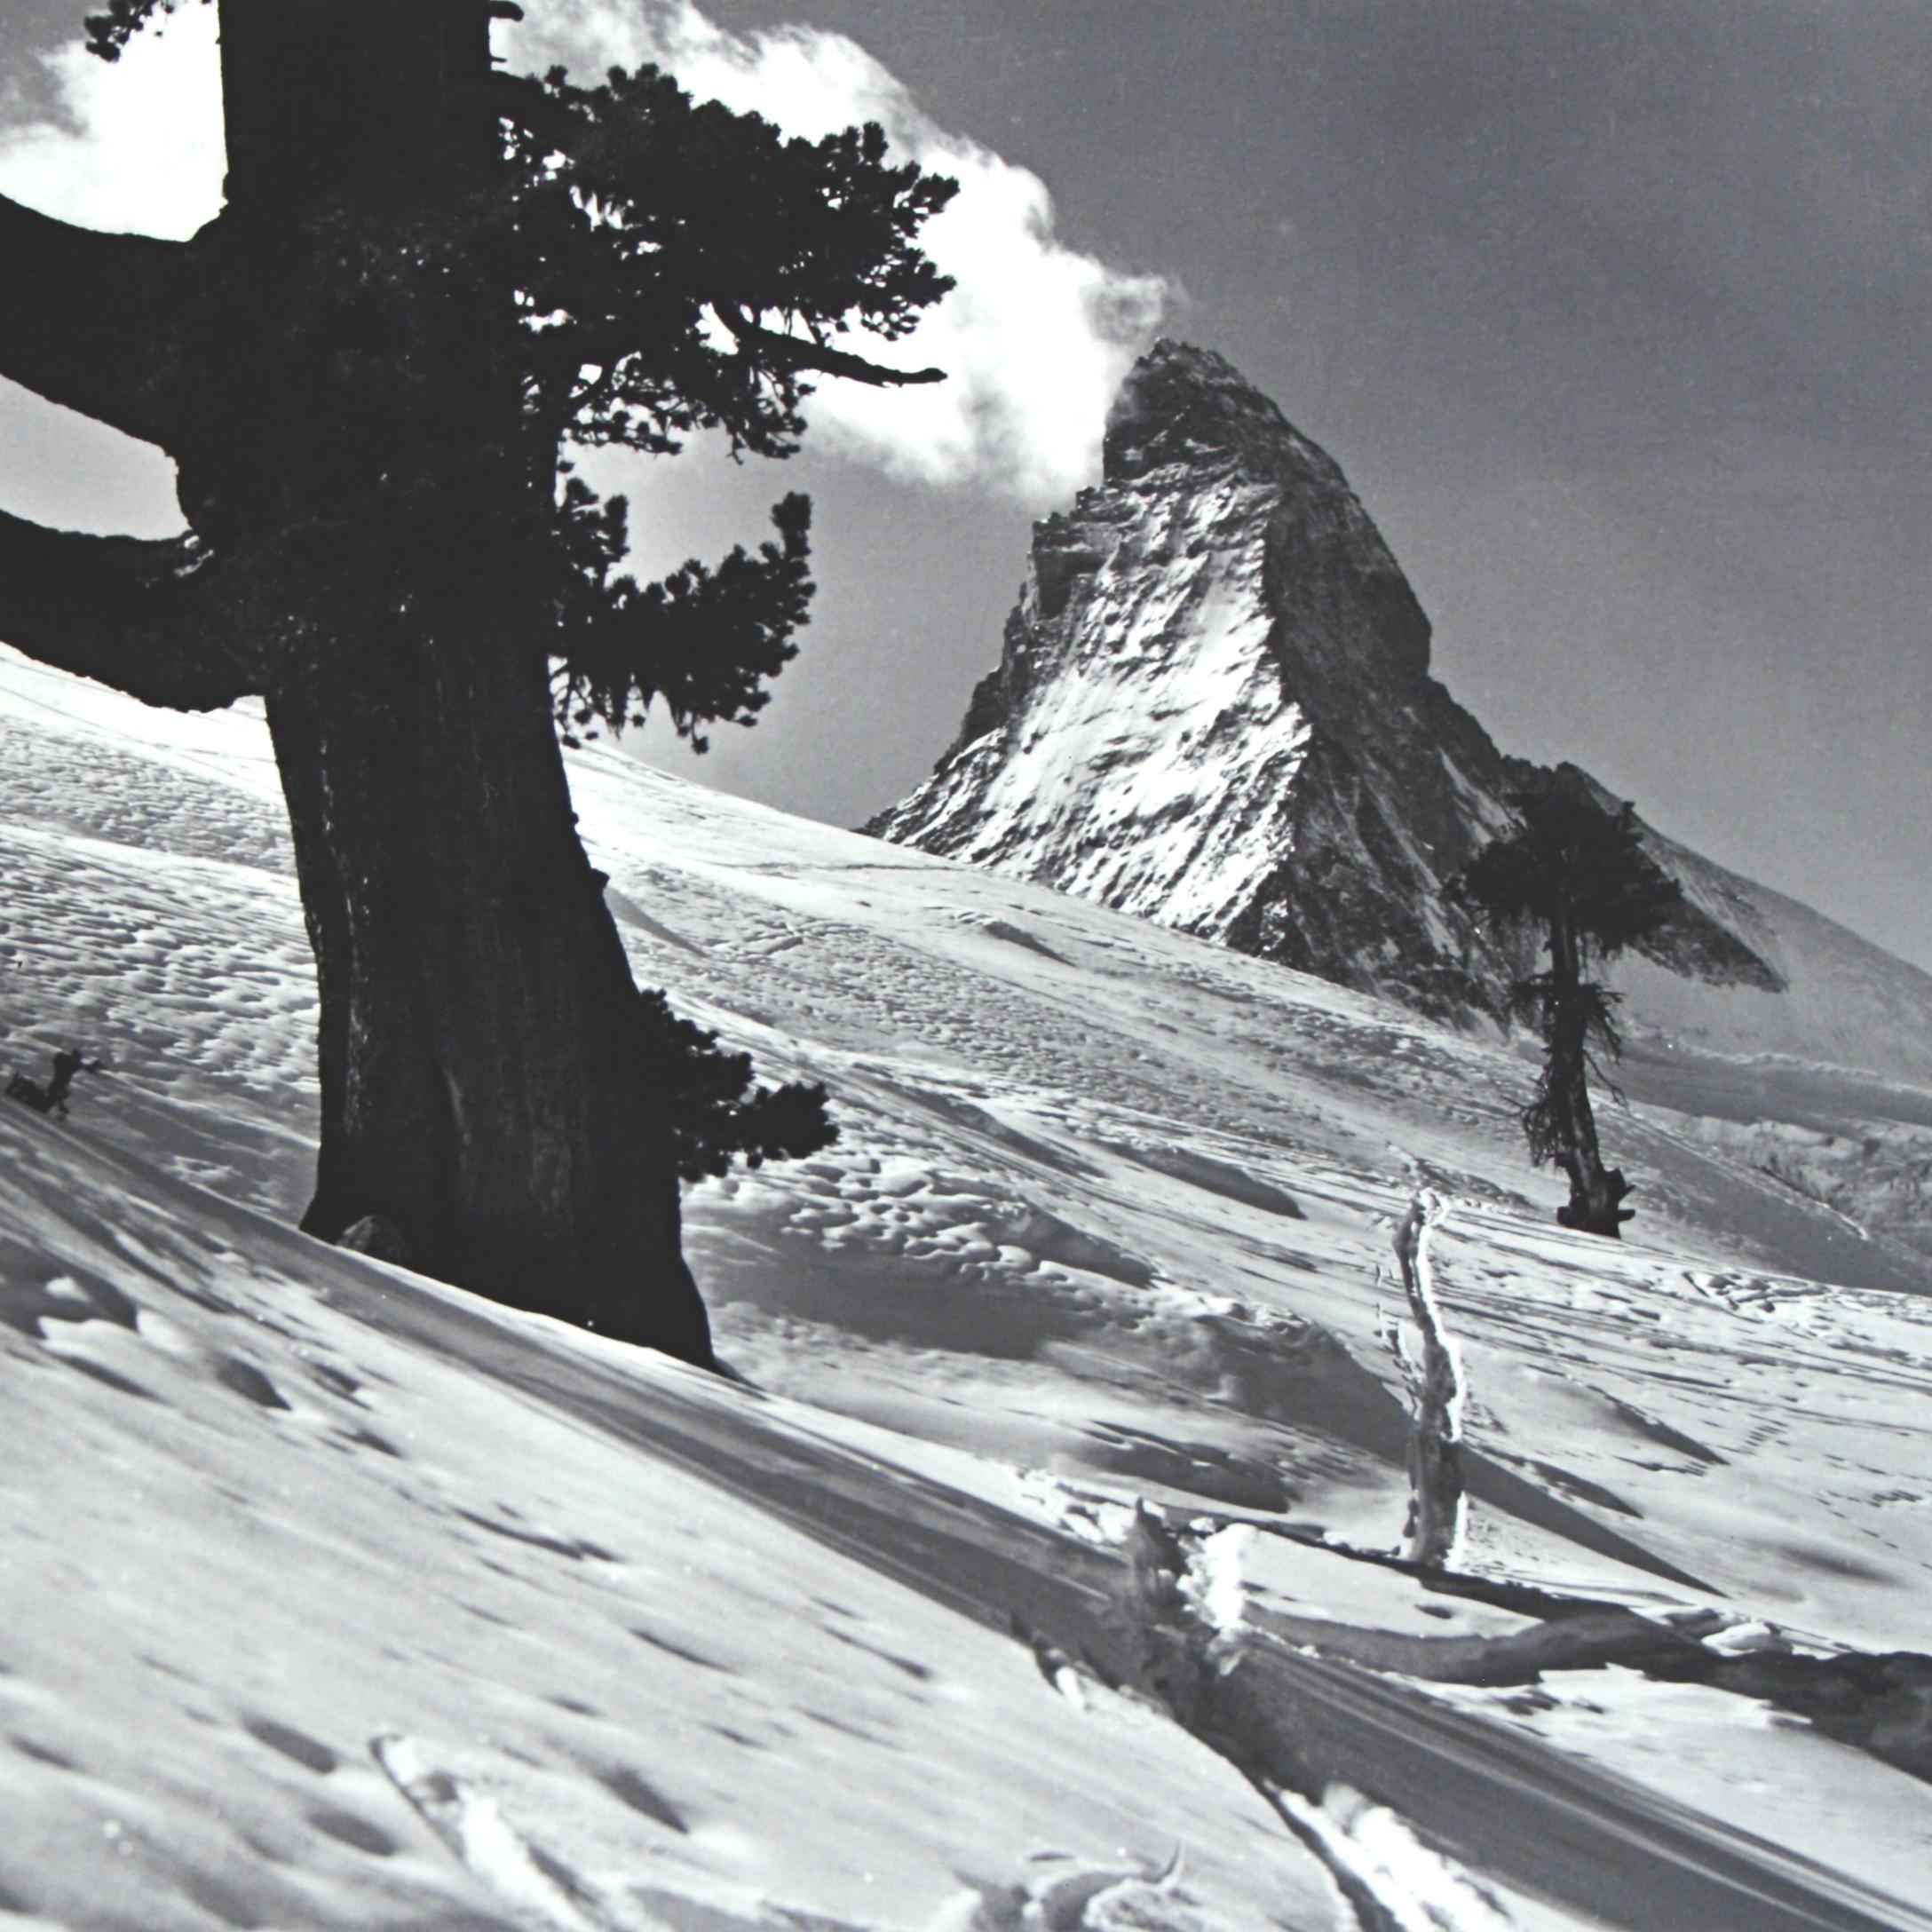 English Alpine Ski Photograph, 'Matterhorn' Taken from Original 1930s Photograph